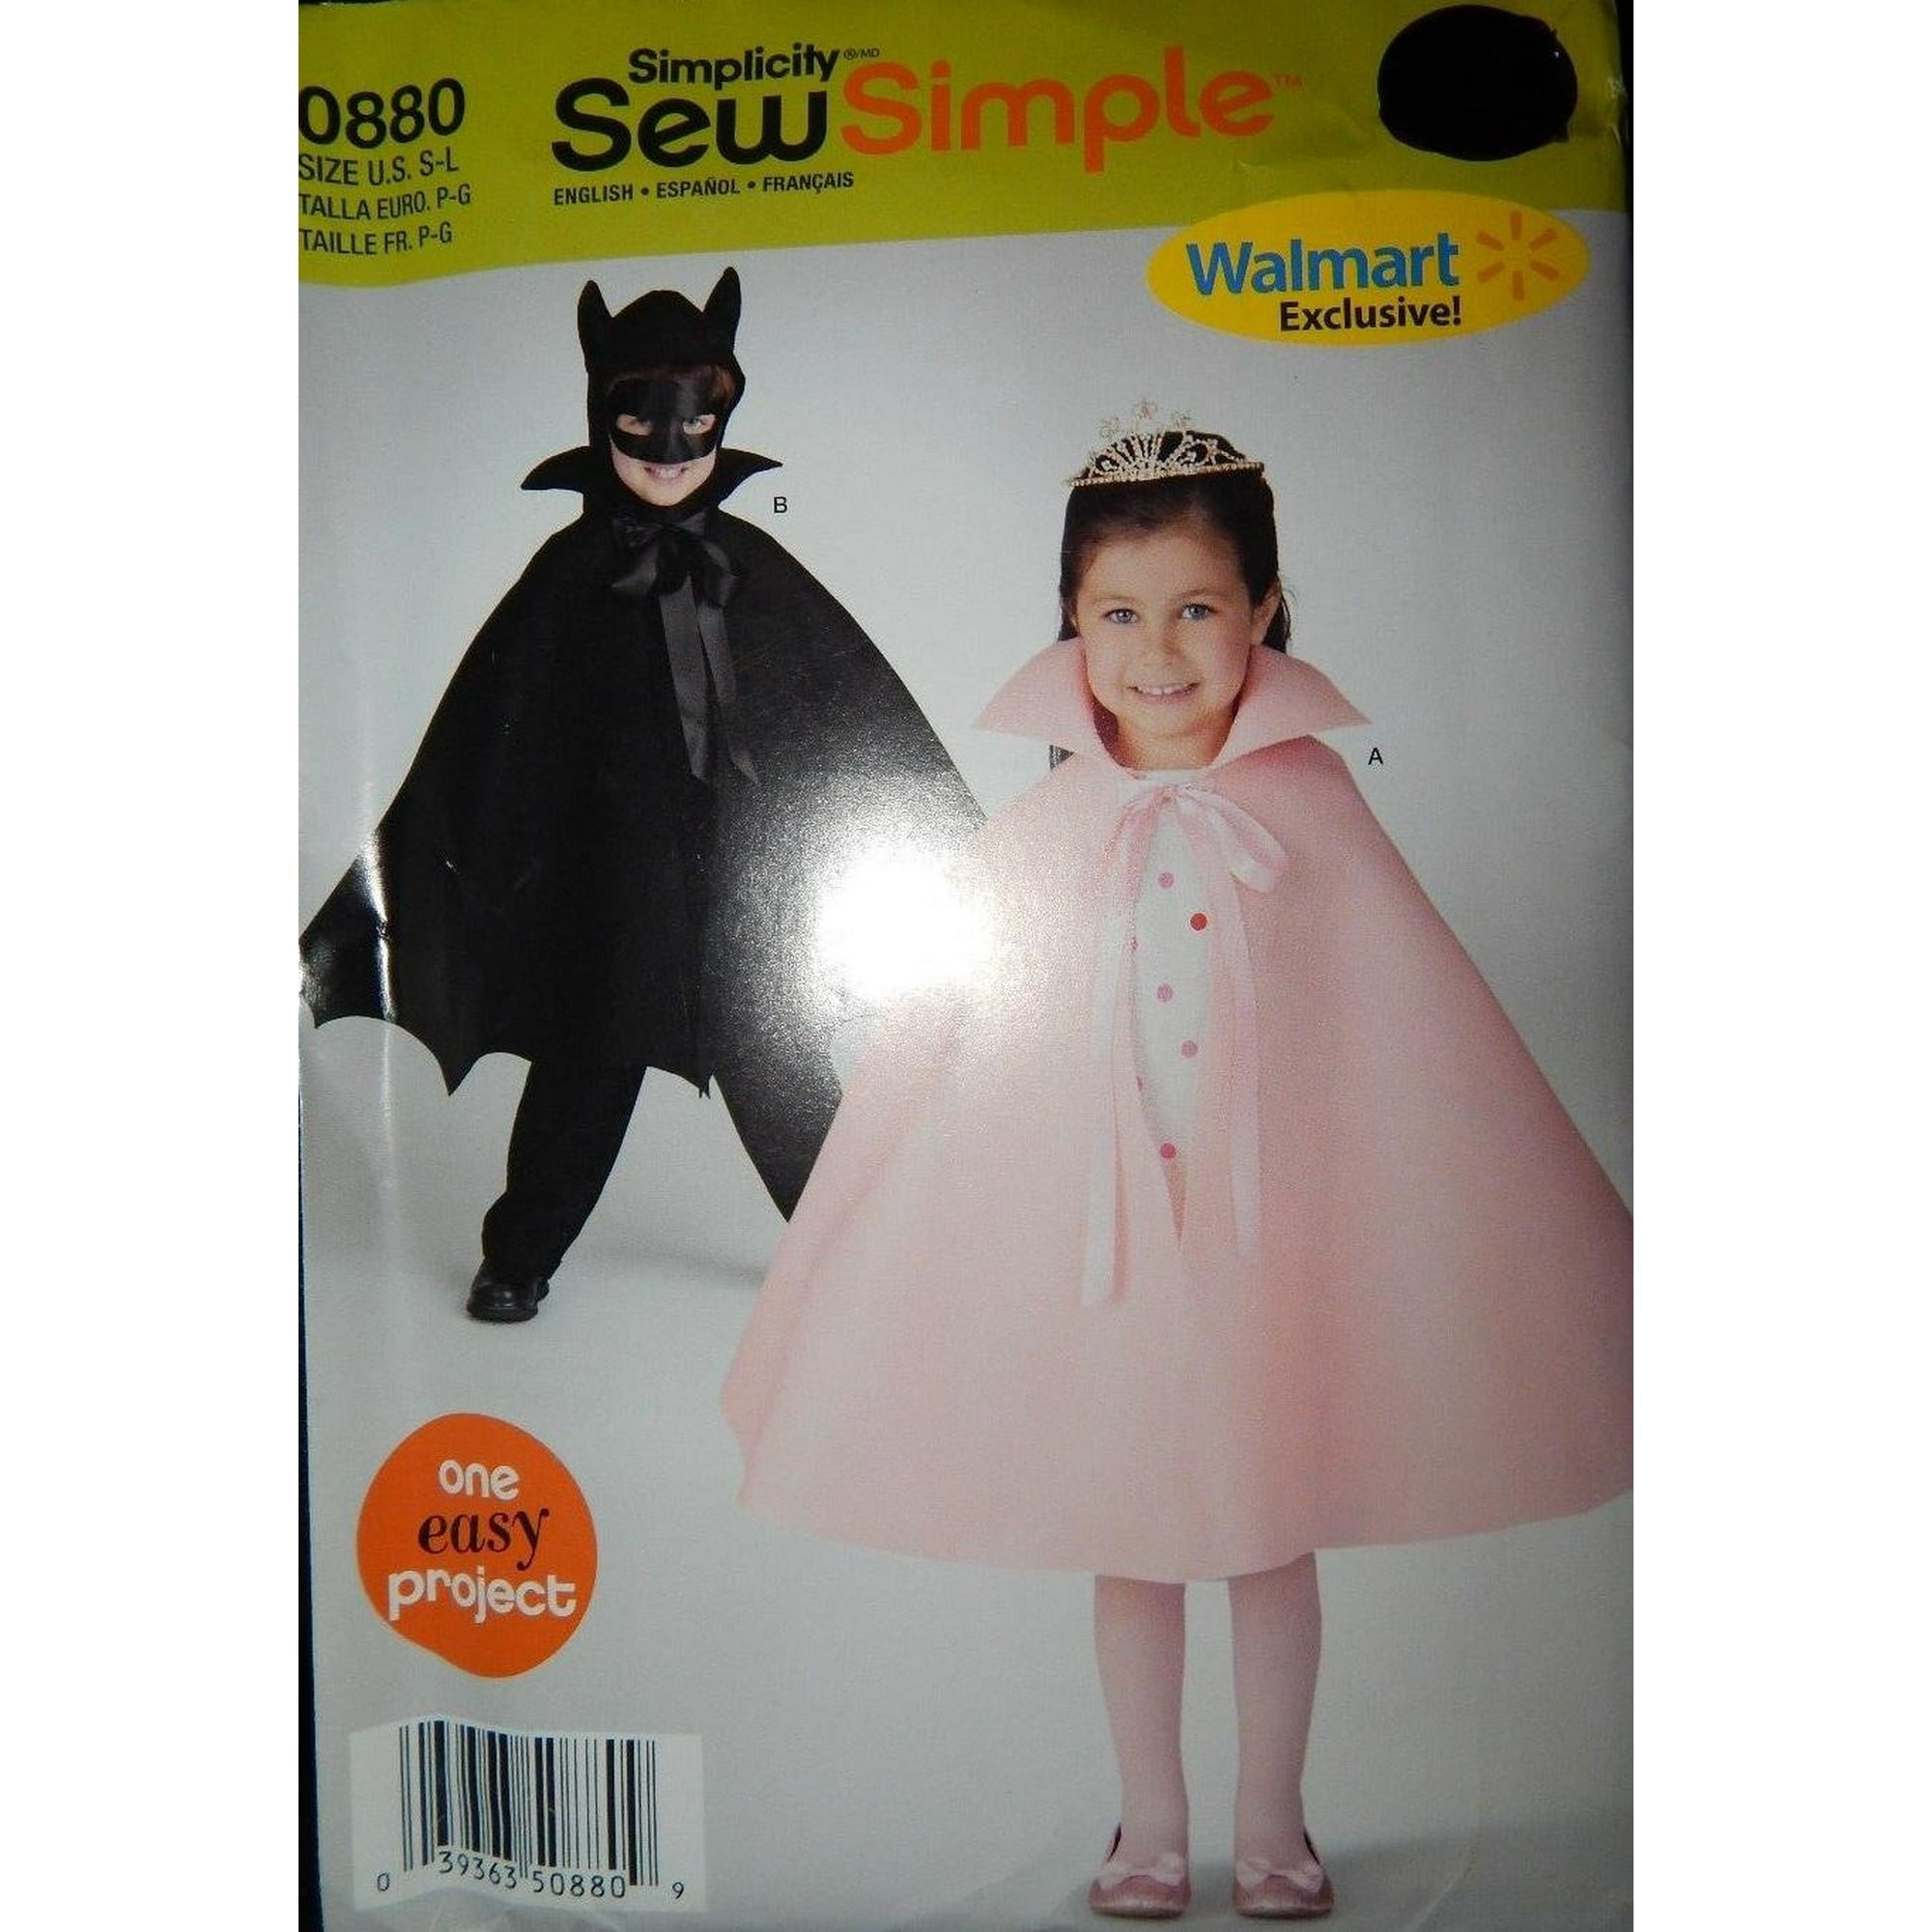 Simplicity 0880 SEW SIMPLE COSTUME Patterns CHILD'S Batman or Princess Cape  : S M L | Walmart Canada